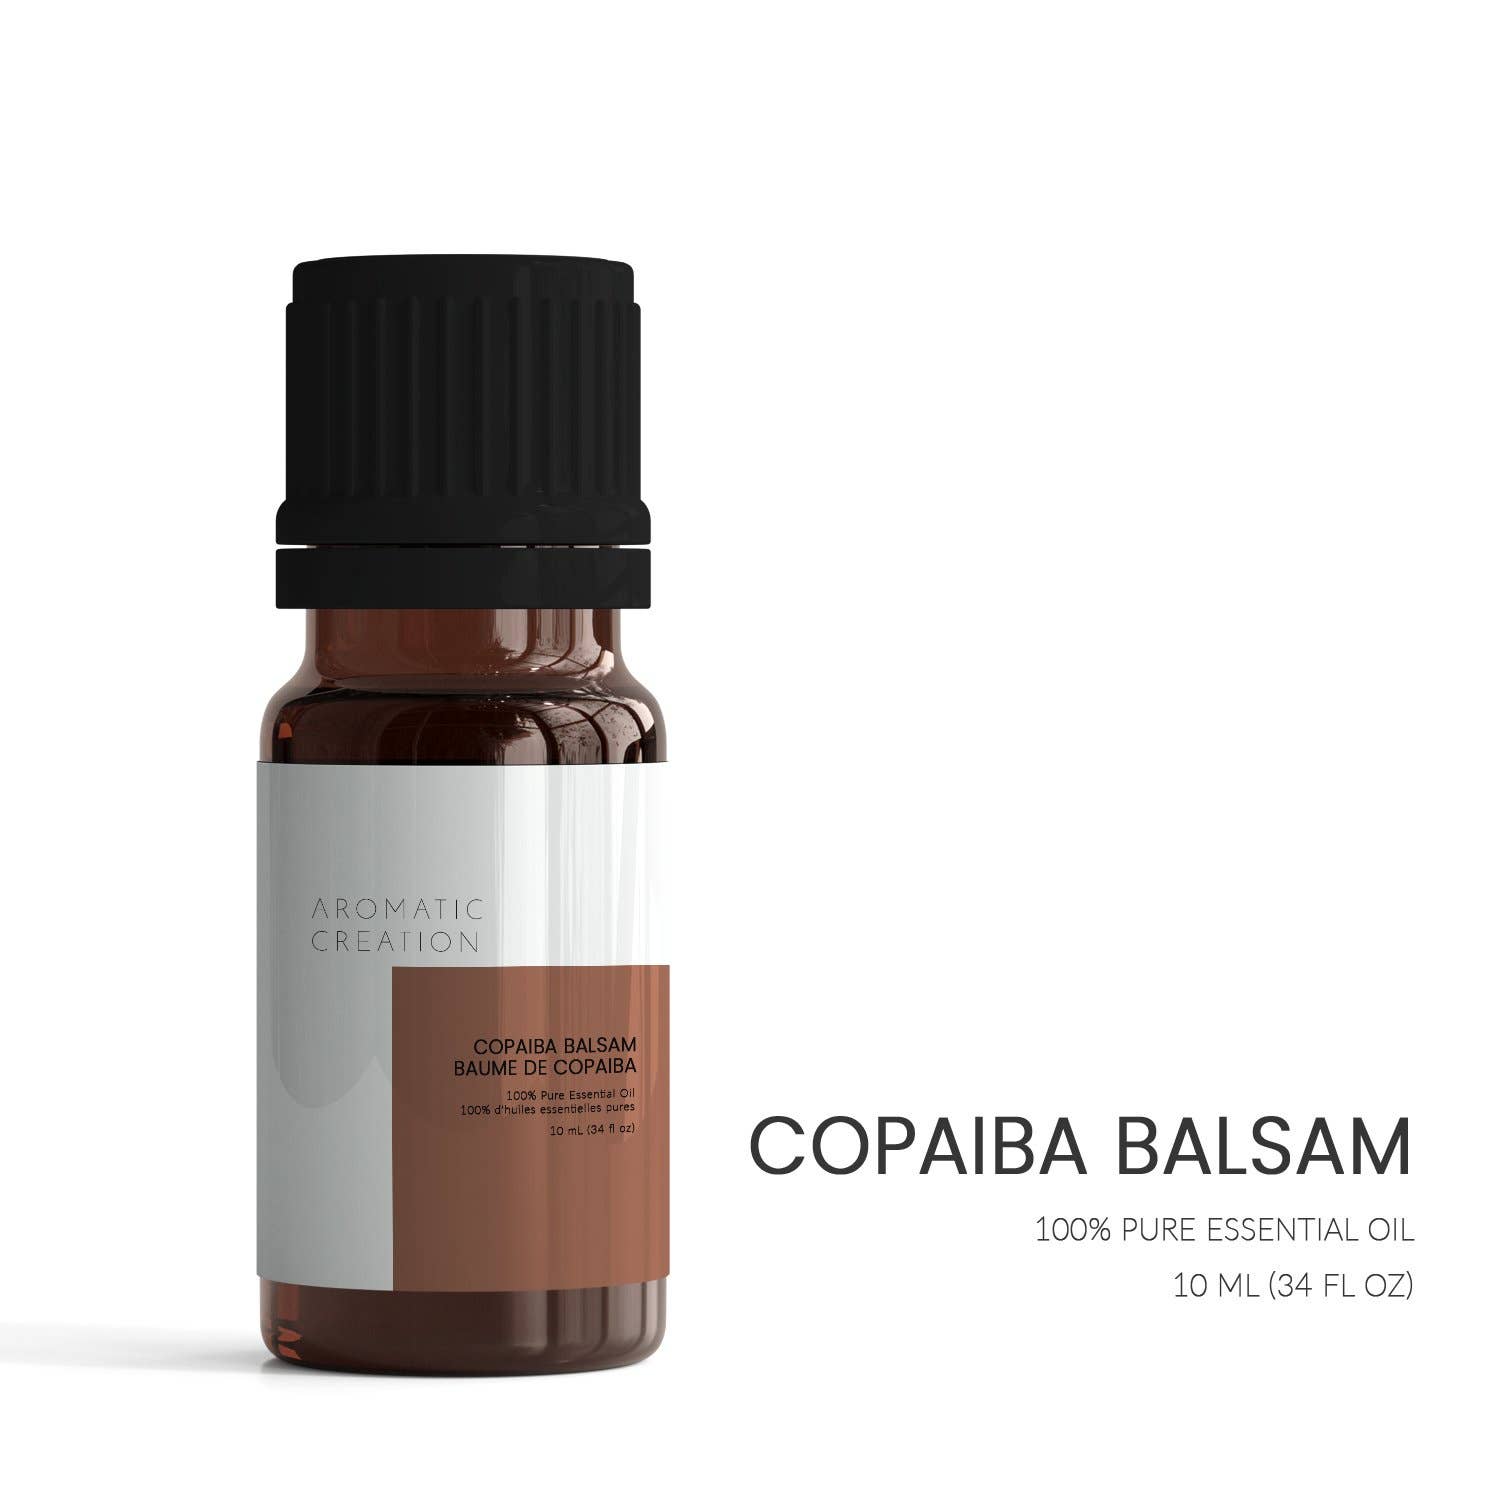 100% Pure Copaiba Balsam Essential Oil